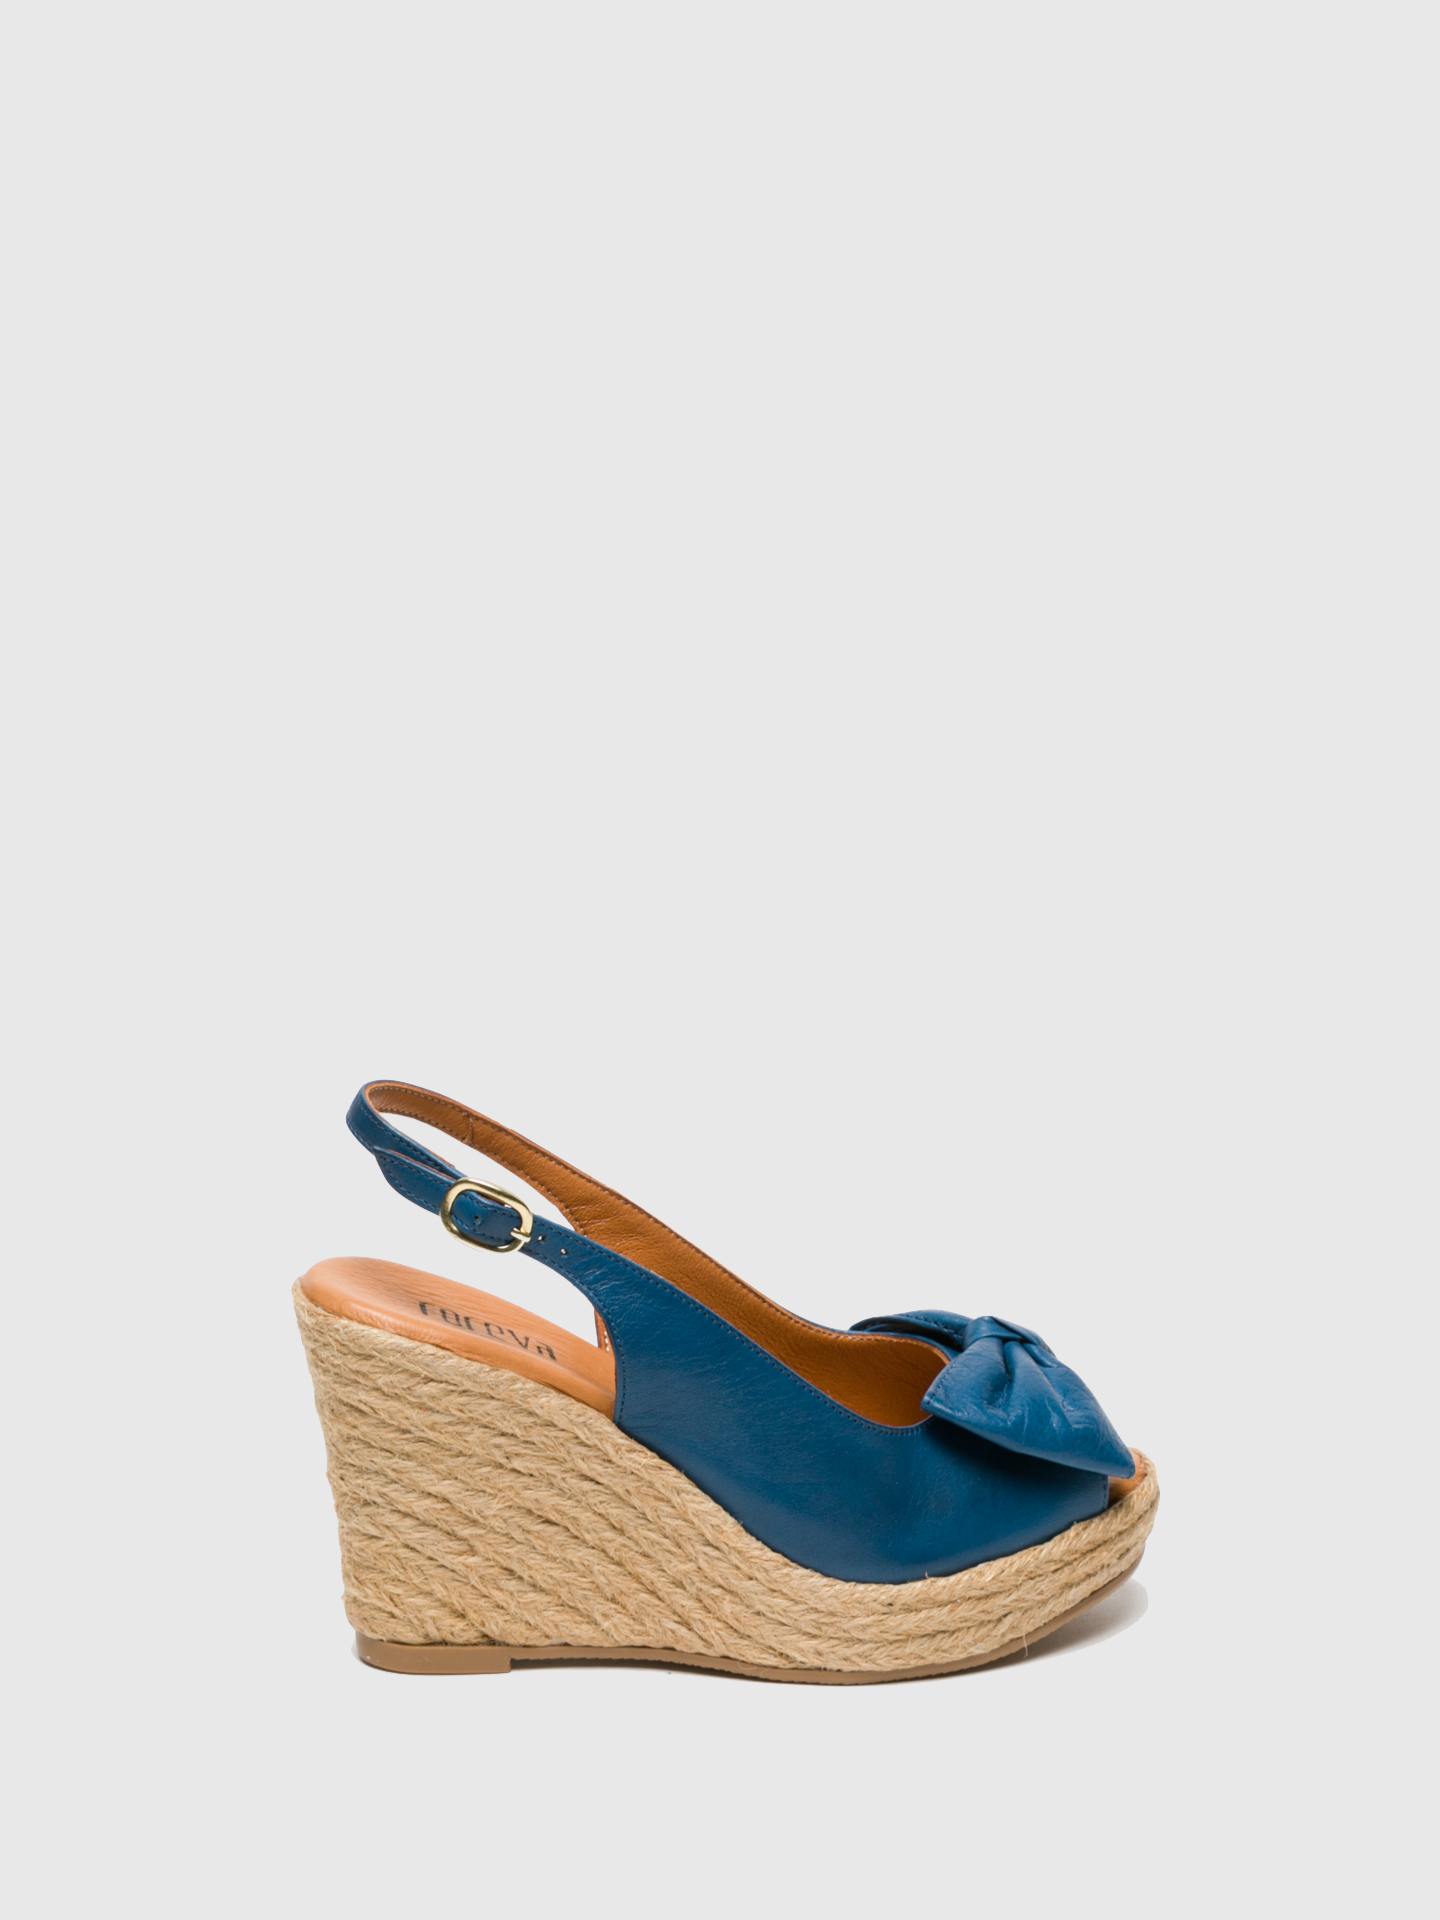 Foreva Blue Wedge Sandals